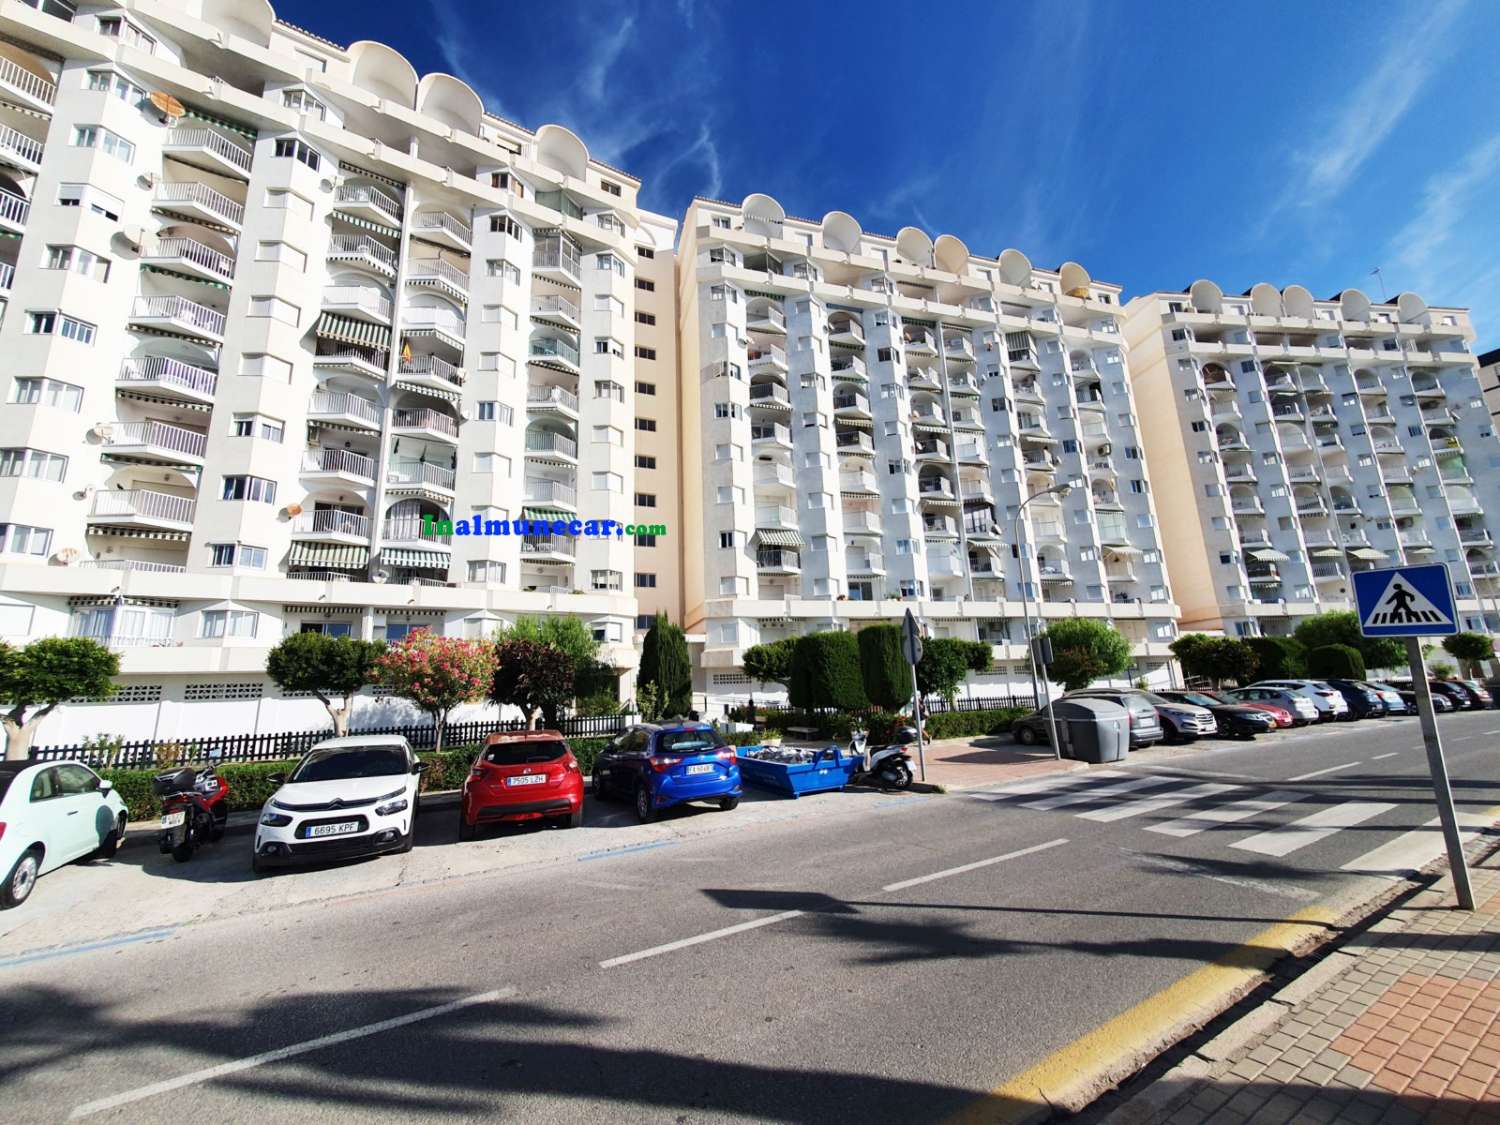 Apartment with parking space for sale on the beachfront, Paseo de Cotobro, Almuñécar, Costa Tropical.